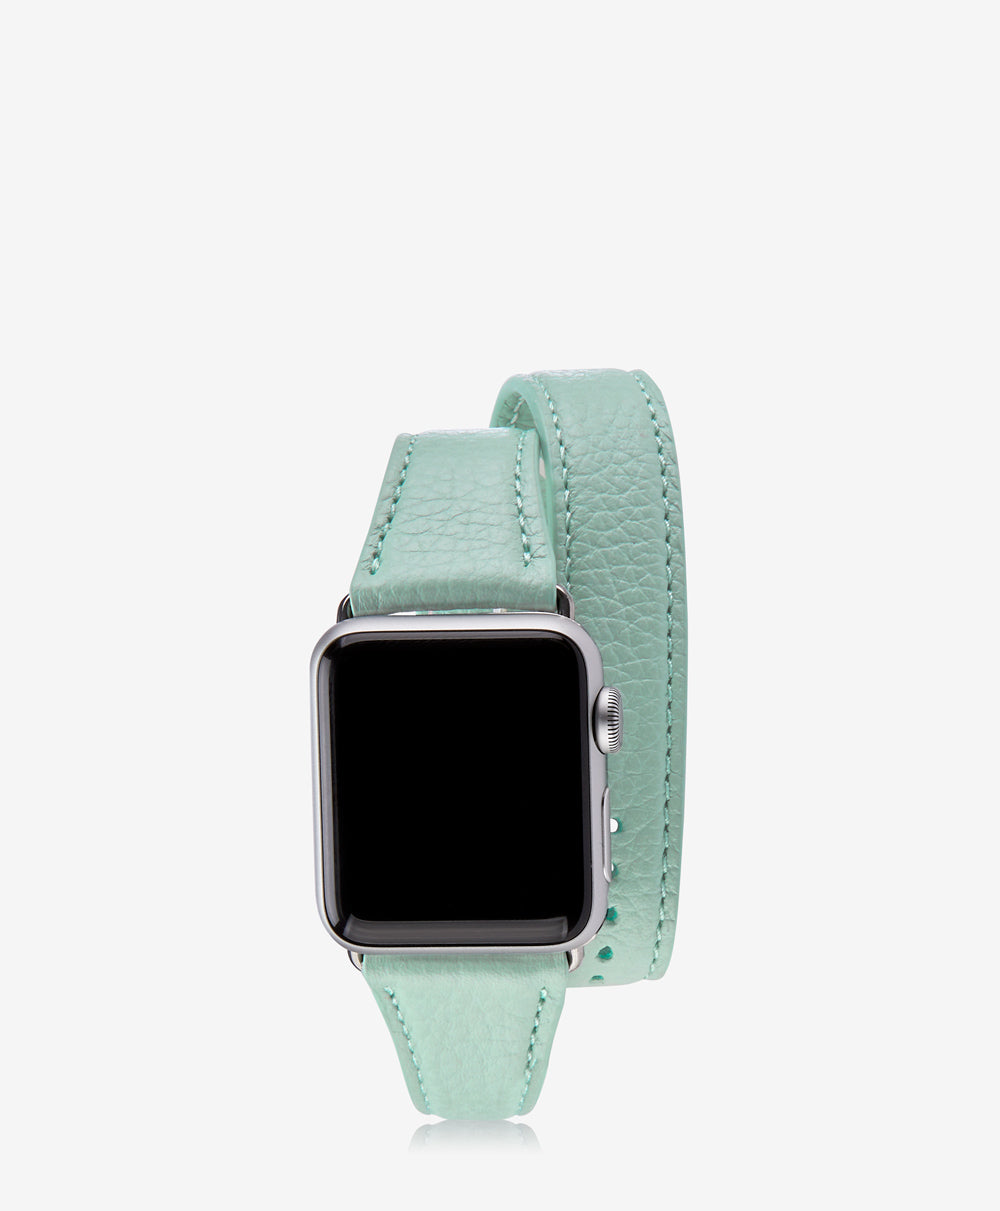 GiGi New York Small Double Wrap Apple Watch Band Azure Pebble Grain Leather